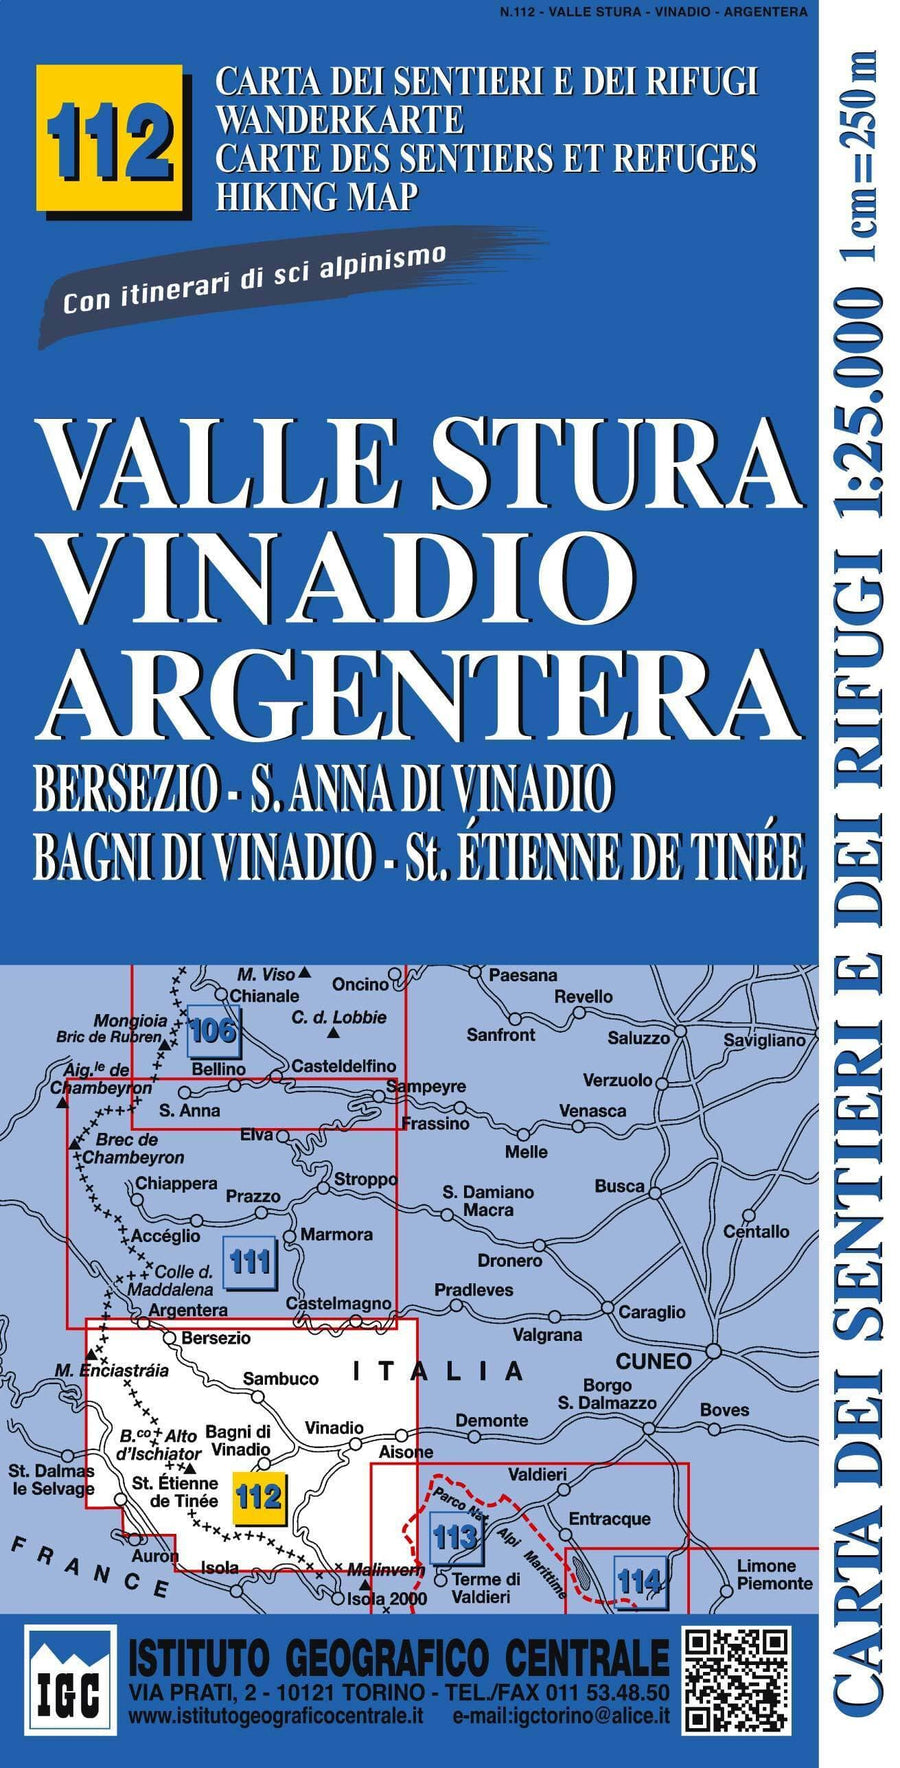 Valle Stura Vinadio Argentera | Istituto Geografico Centrale Hiking Map 